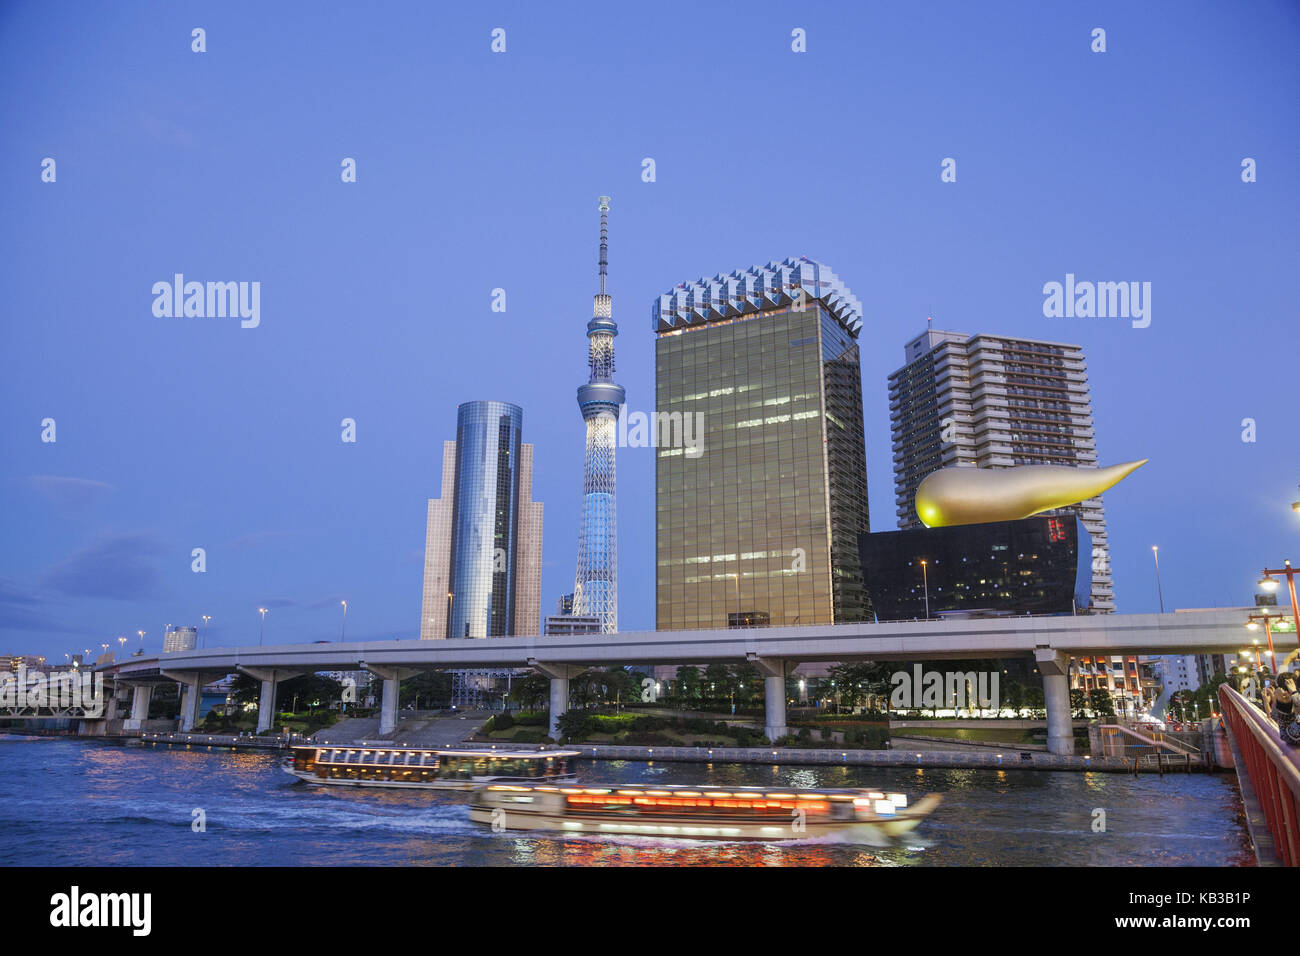 Giappone, Honshu, Tokyo, Asakusa, alta sorge, edifici per uffici e torre skytree, sumidagawa river, Foto Stock